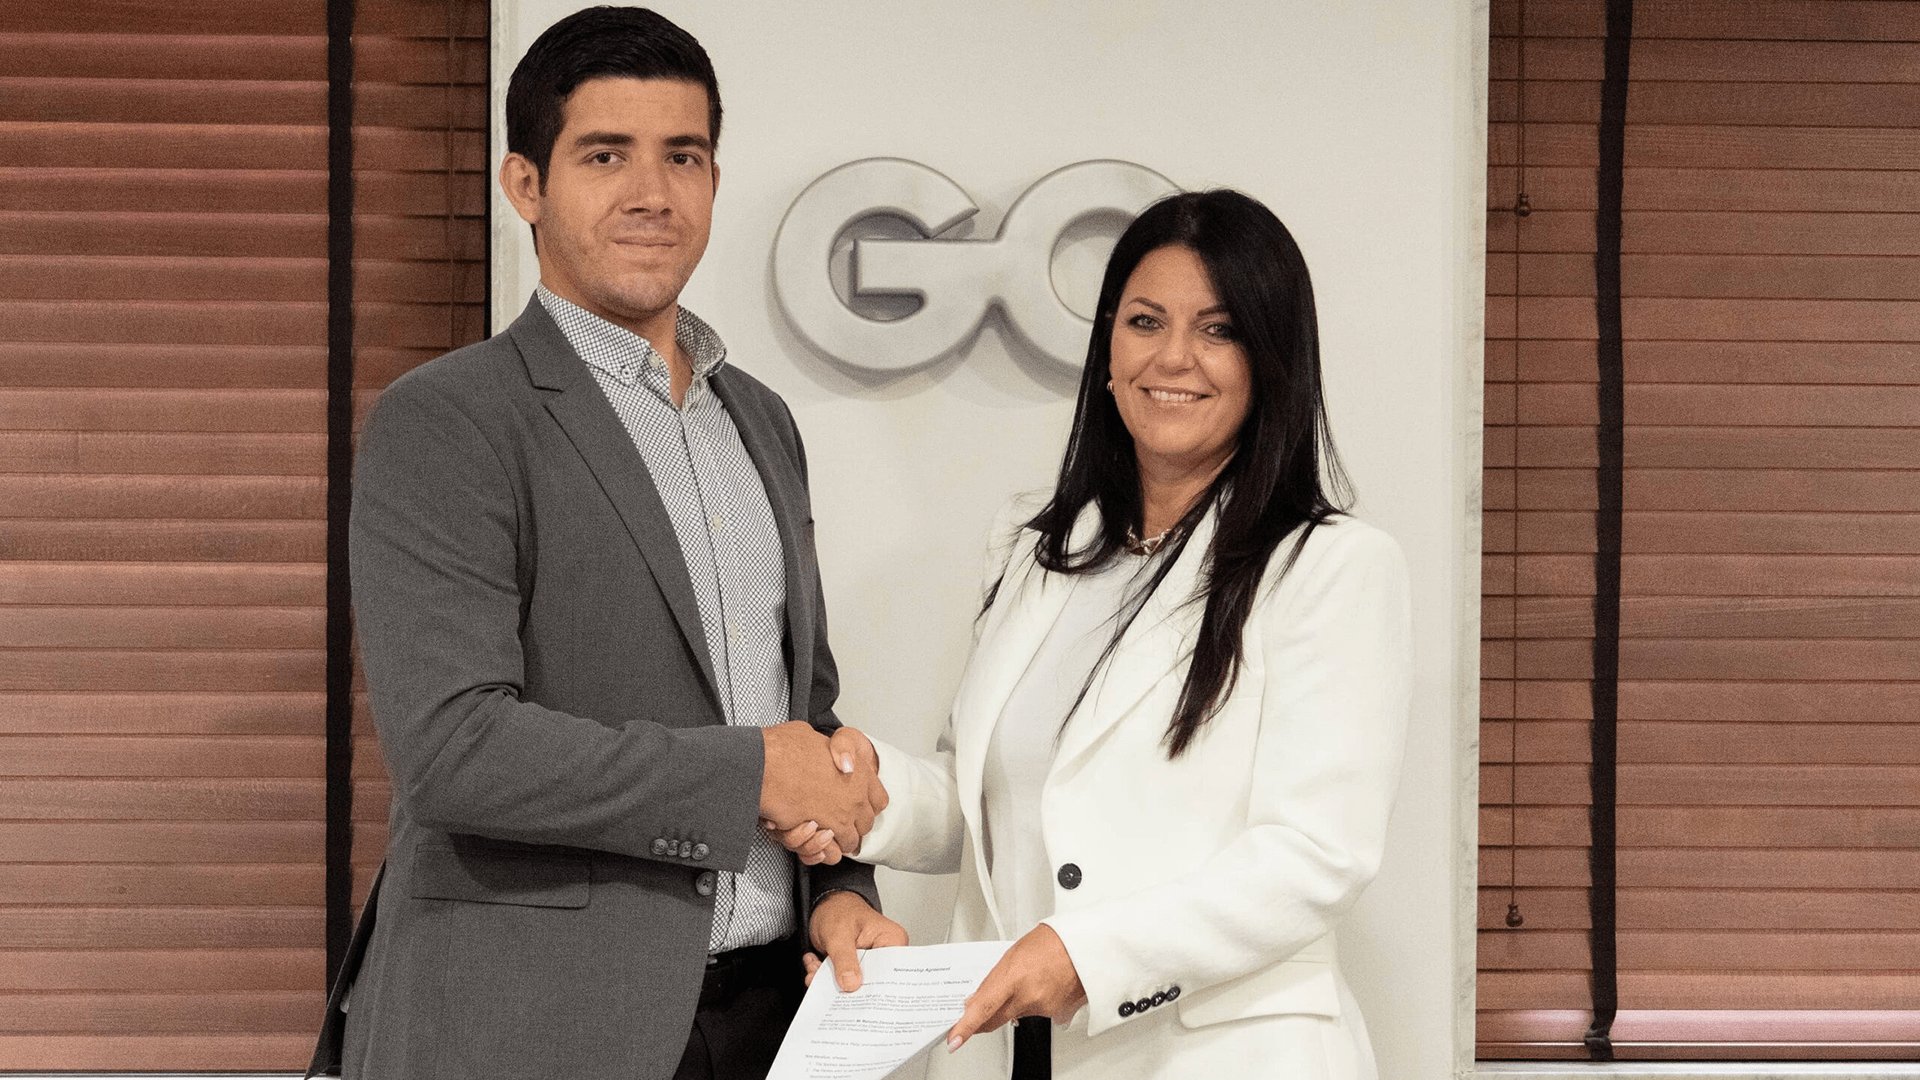 GO Announces Corporate Sponsorship Agreement